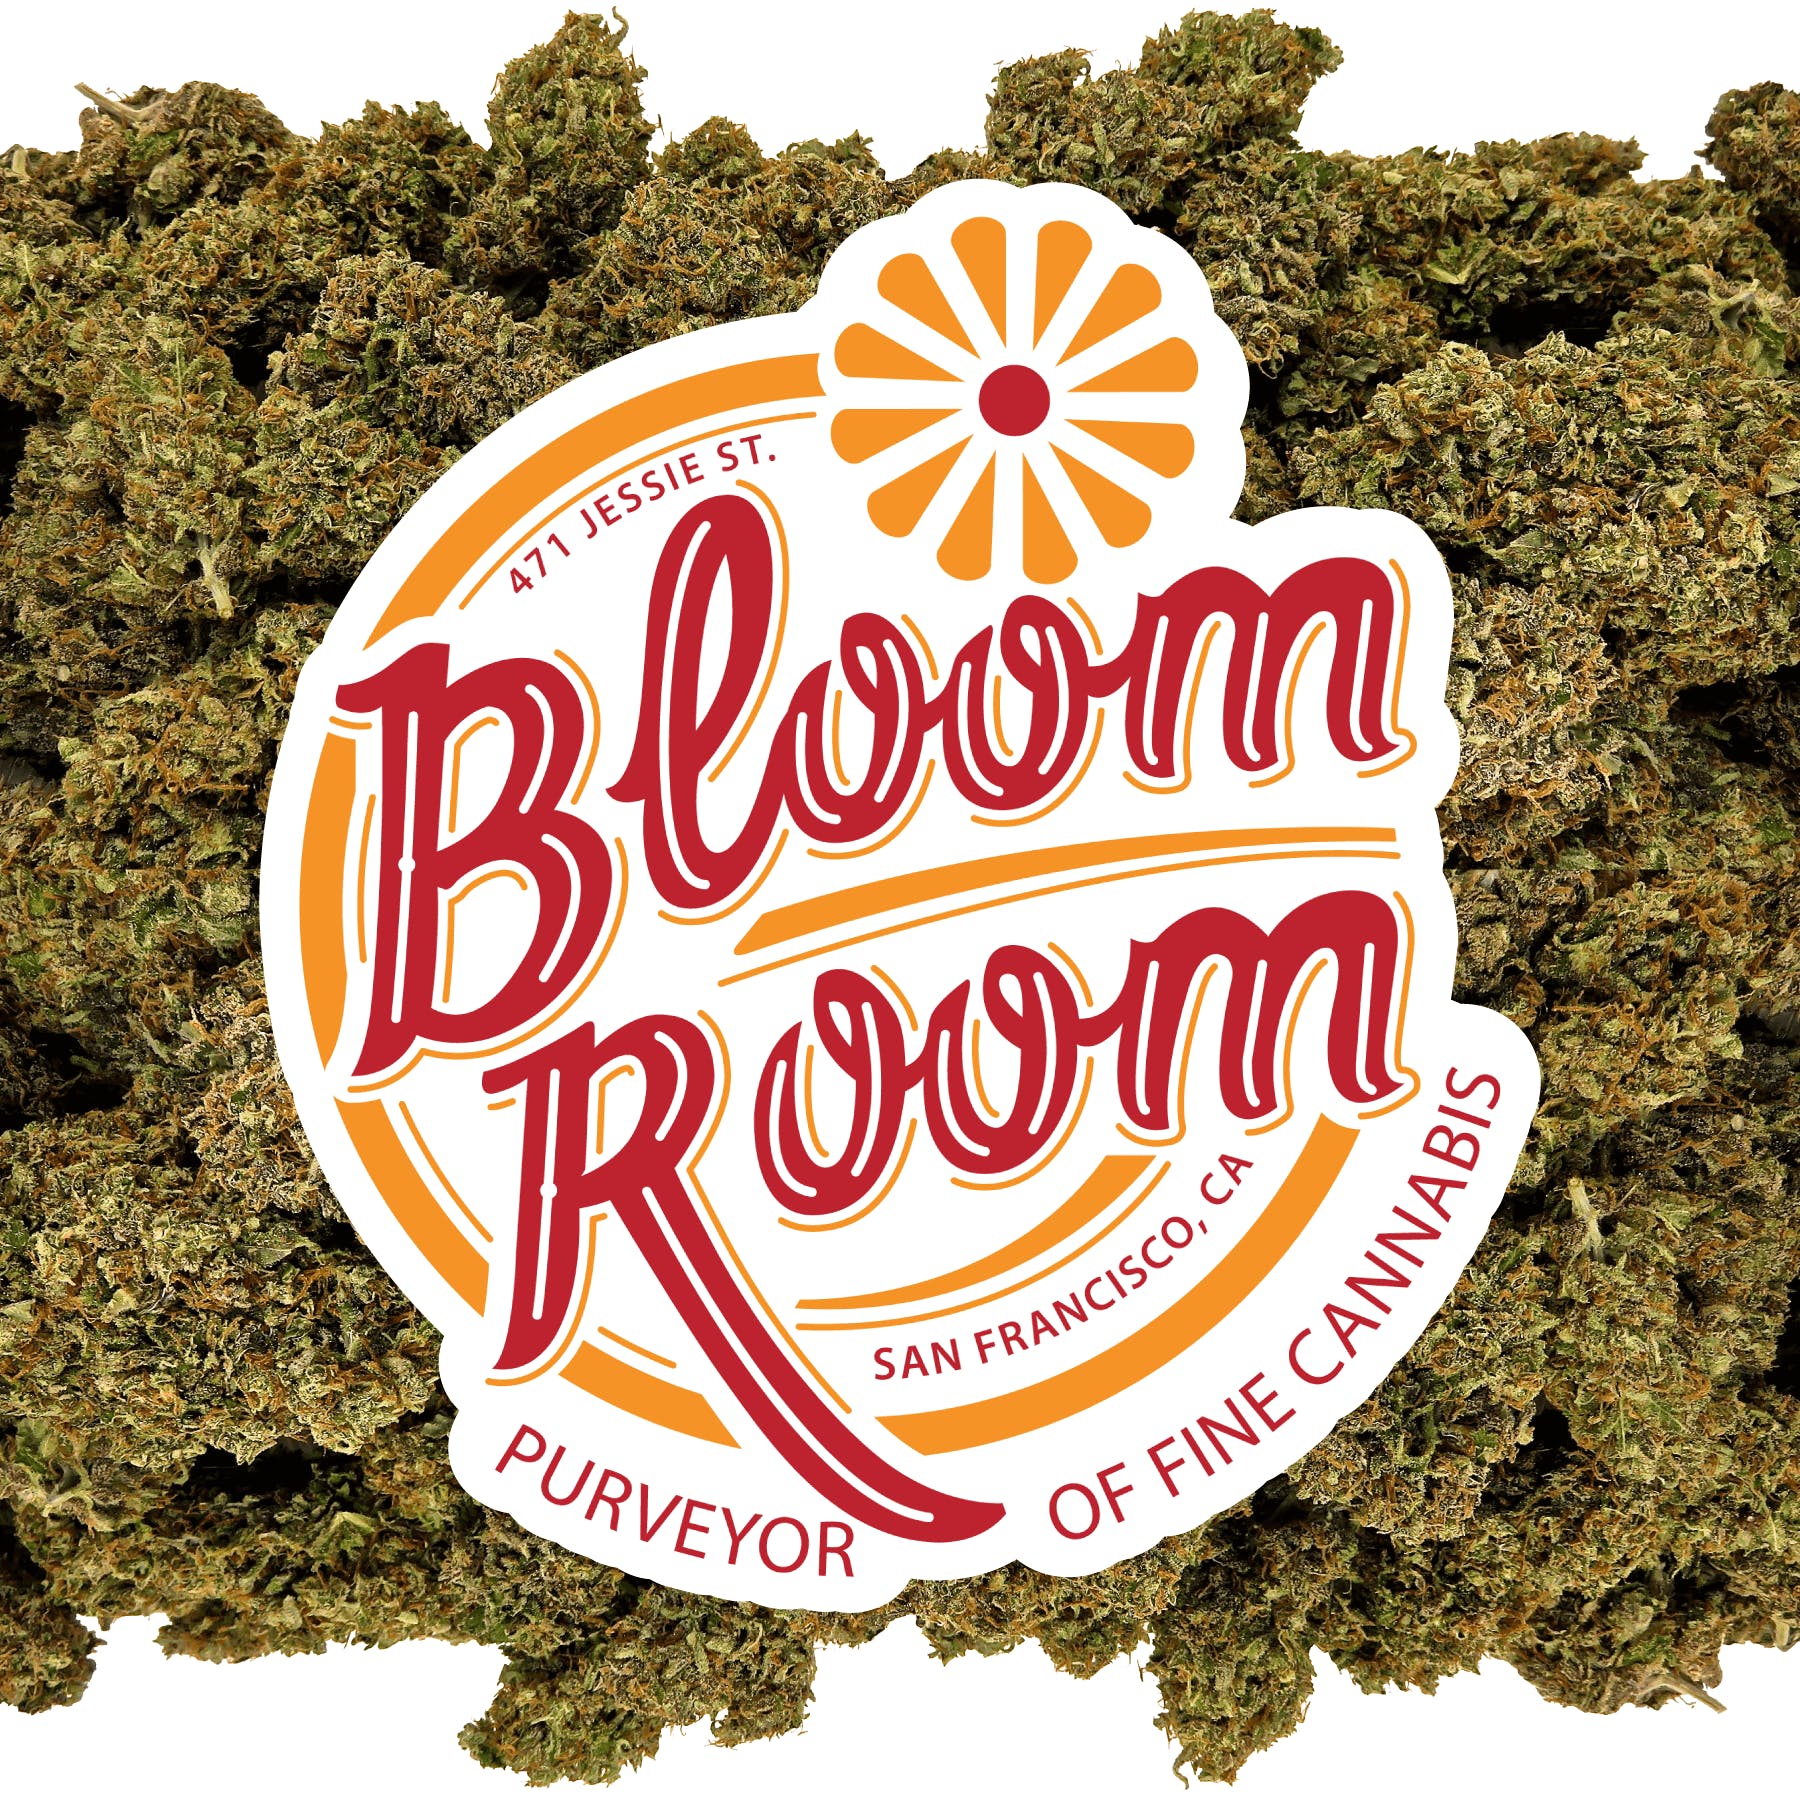 Bloom Room Collective - Medical Marijuana Doctors - Cannabizme.com